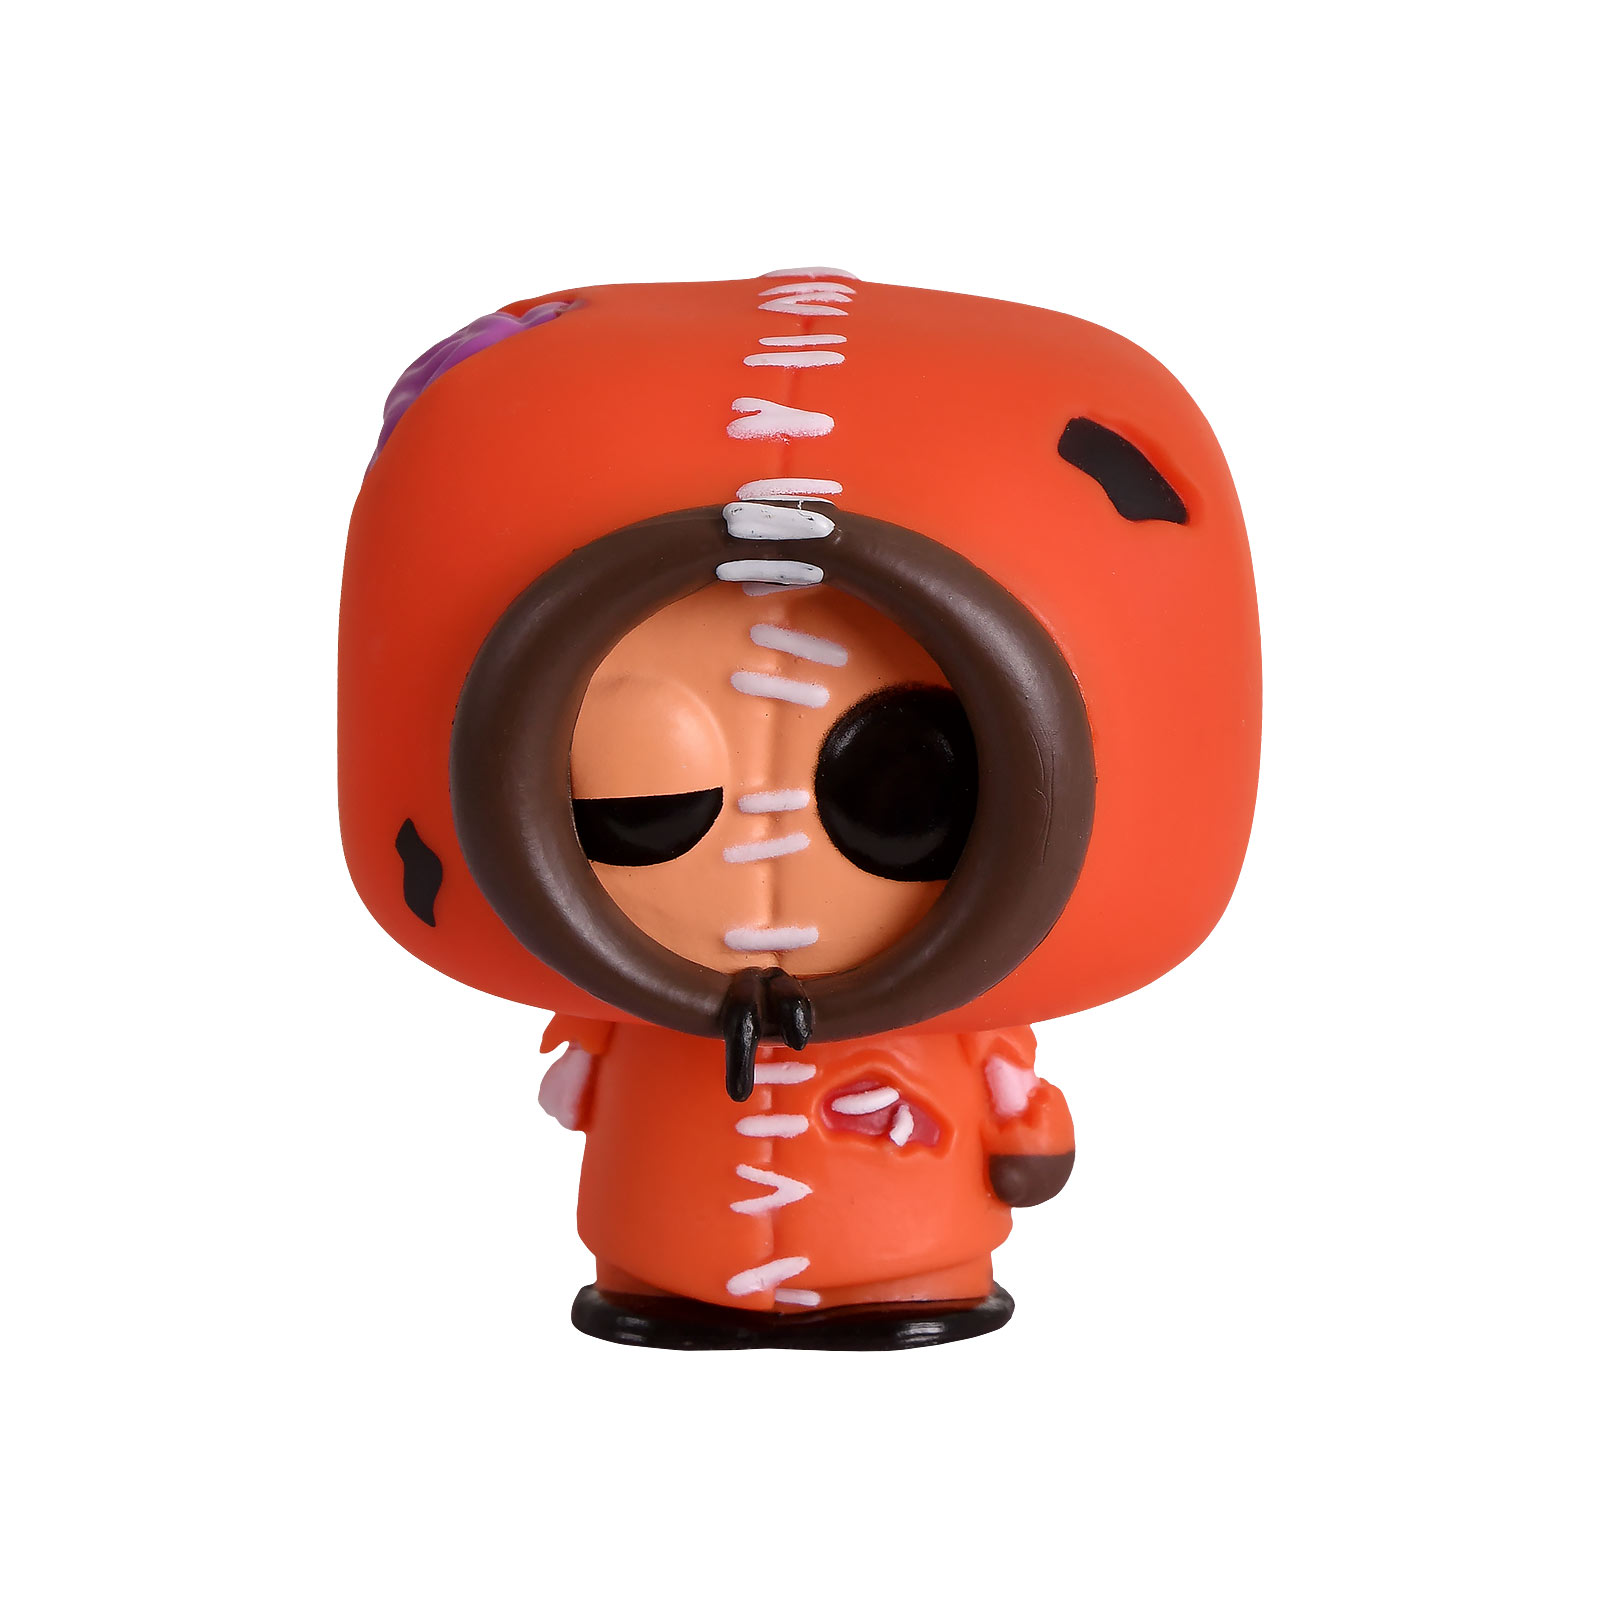 South Park - Zombie Kenny Funko Pop Figur